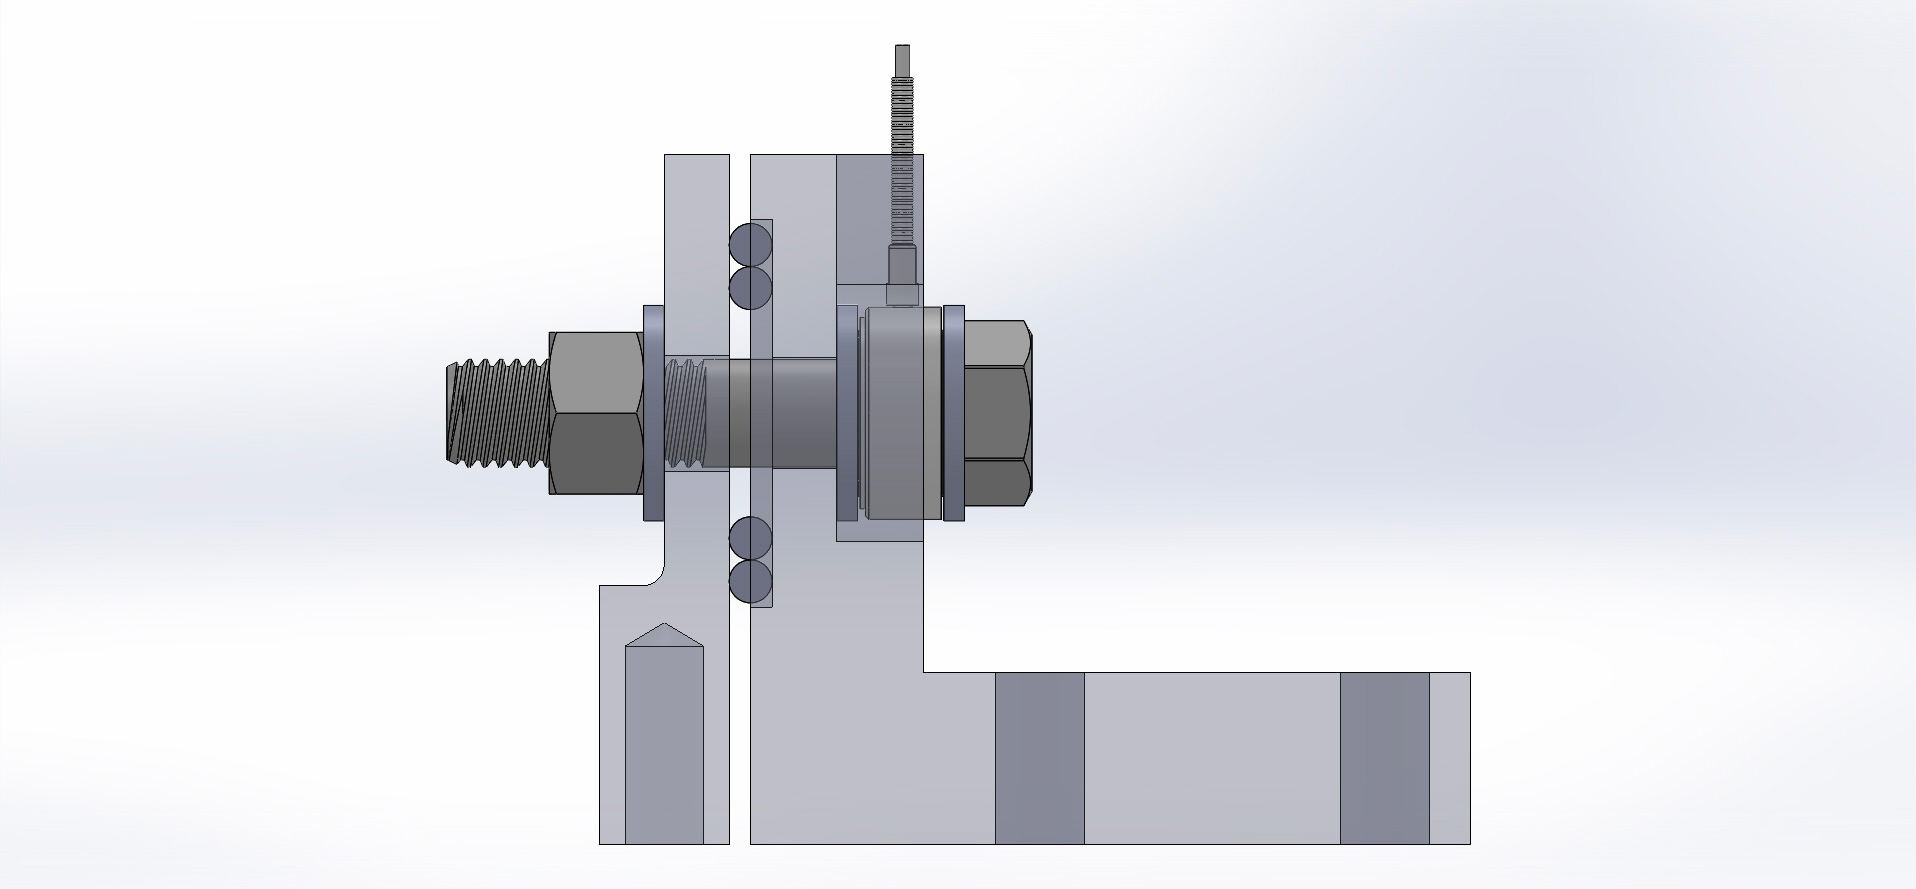 CAD mockup drawing of fastener